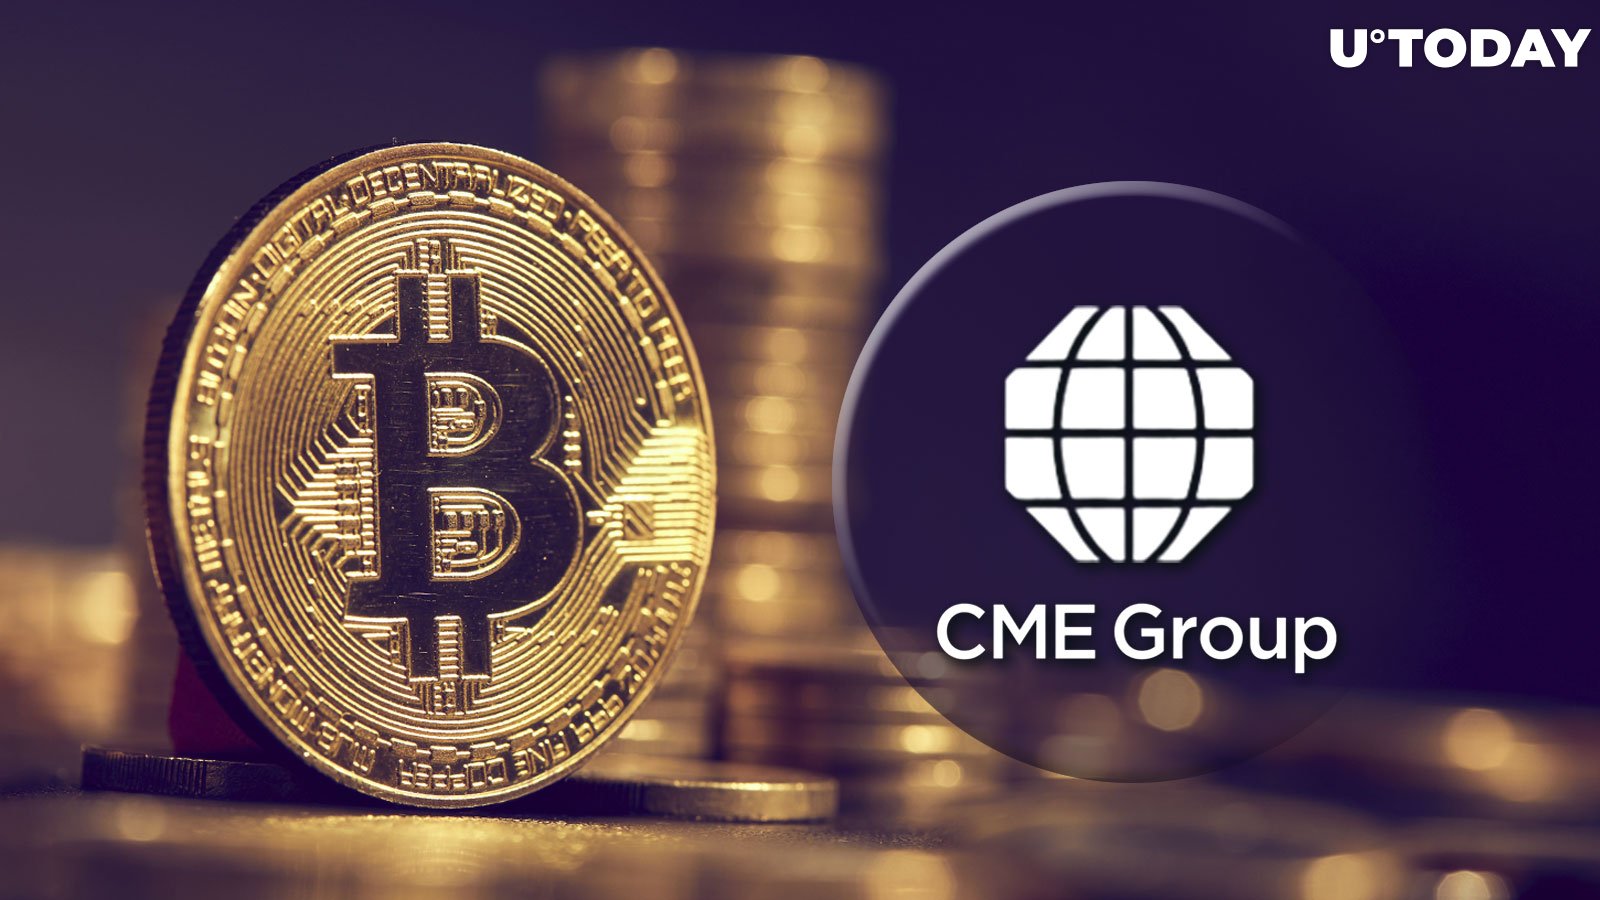 Futures exchange giant CME plans to start Bitcoin trading 